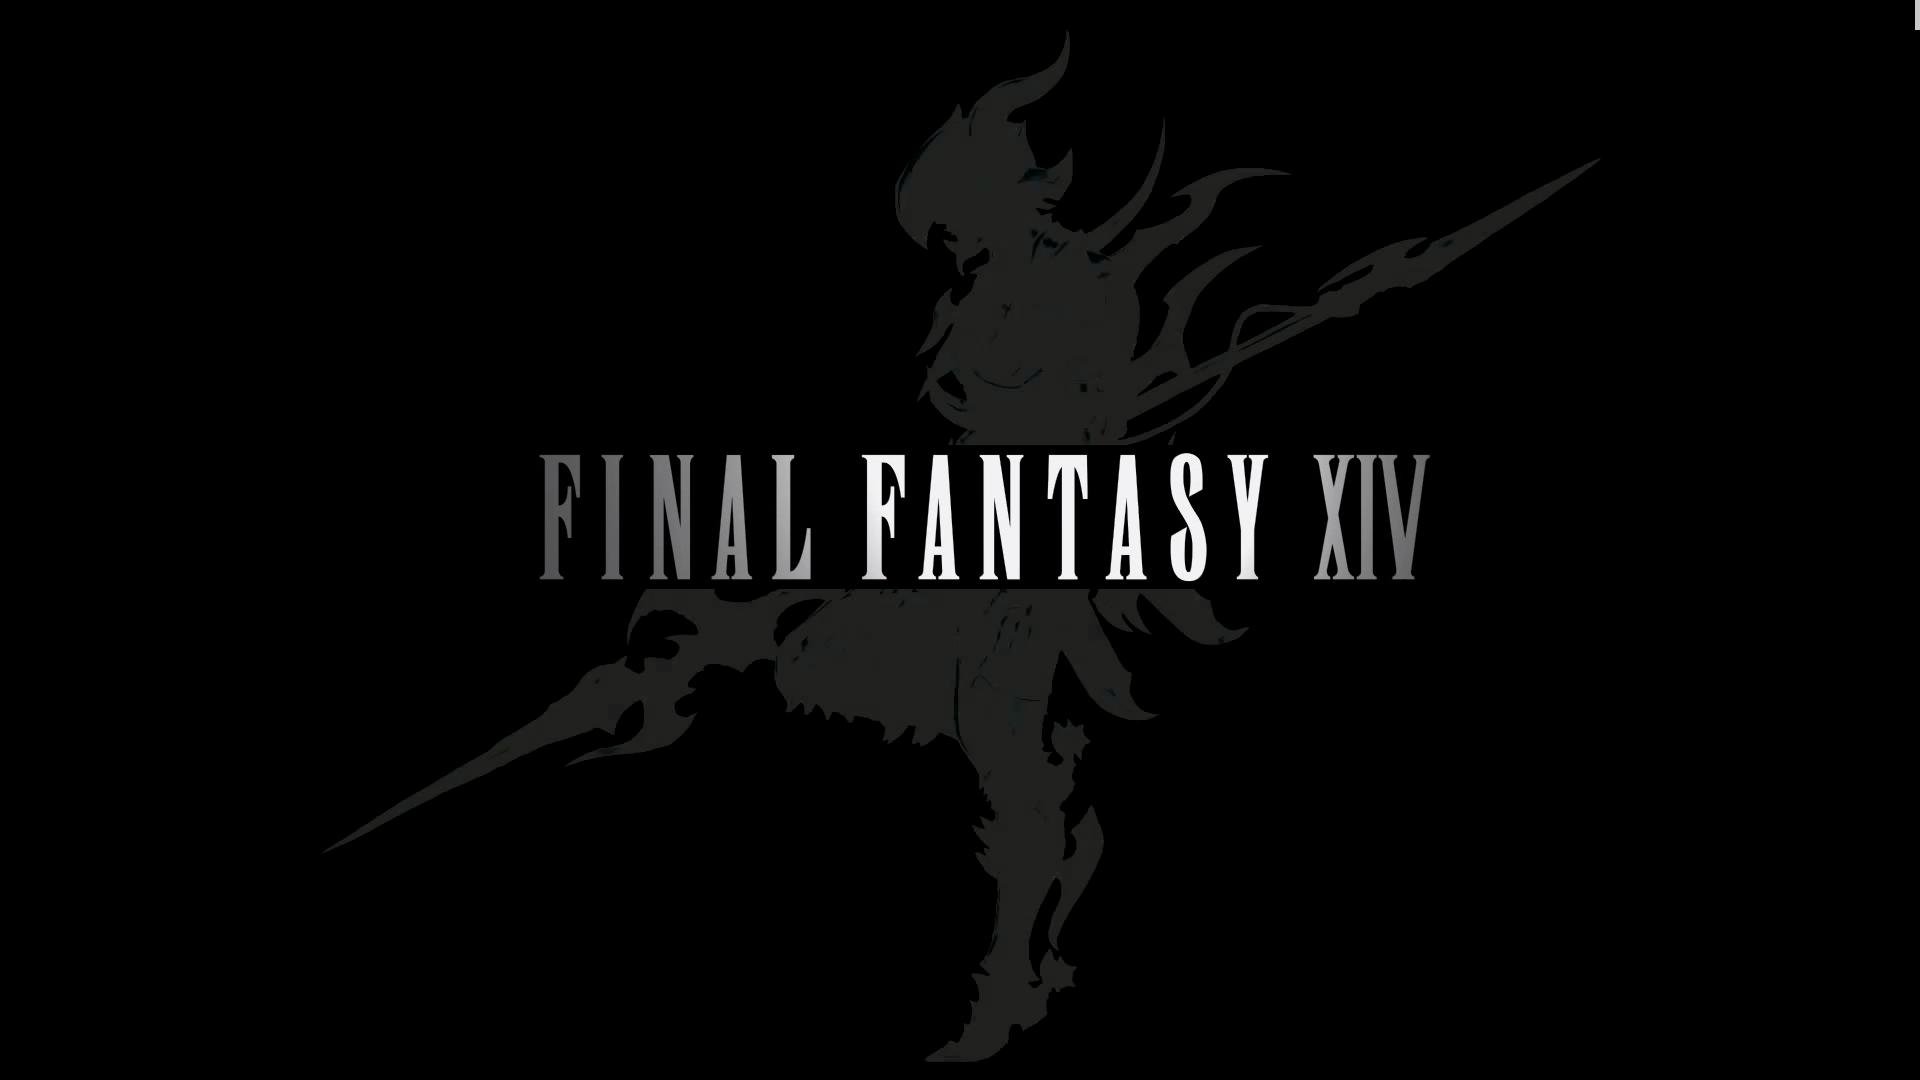 High resolution Final Fantasy XIV (FF14) 1080p wallpaper ID:155909 for computer